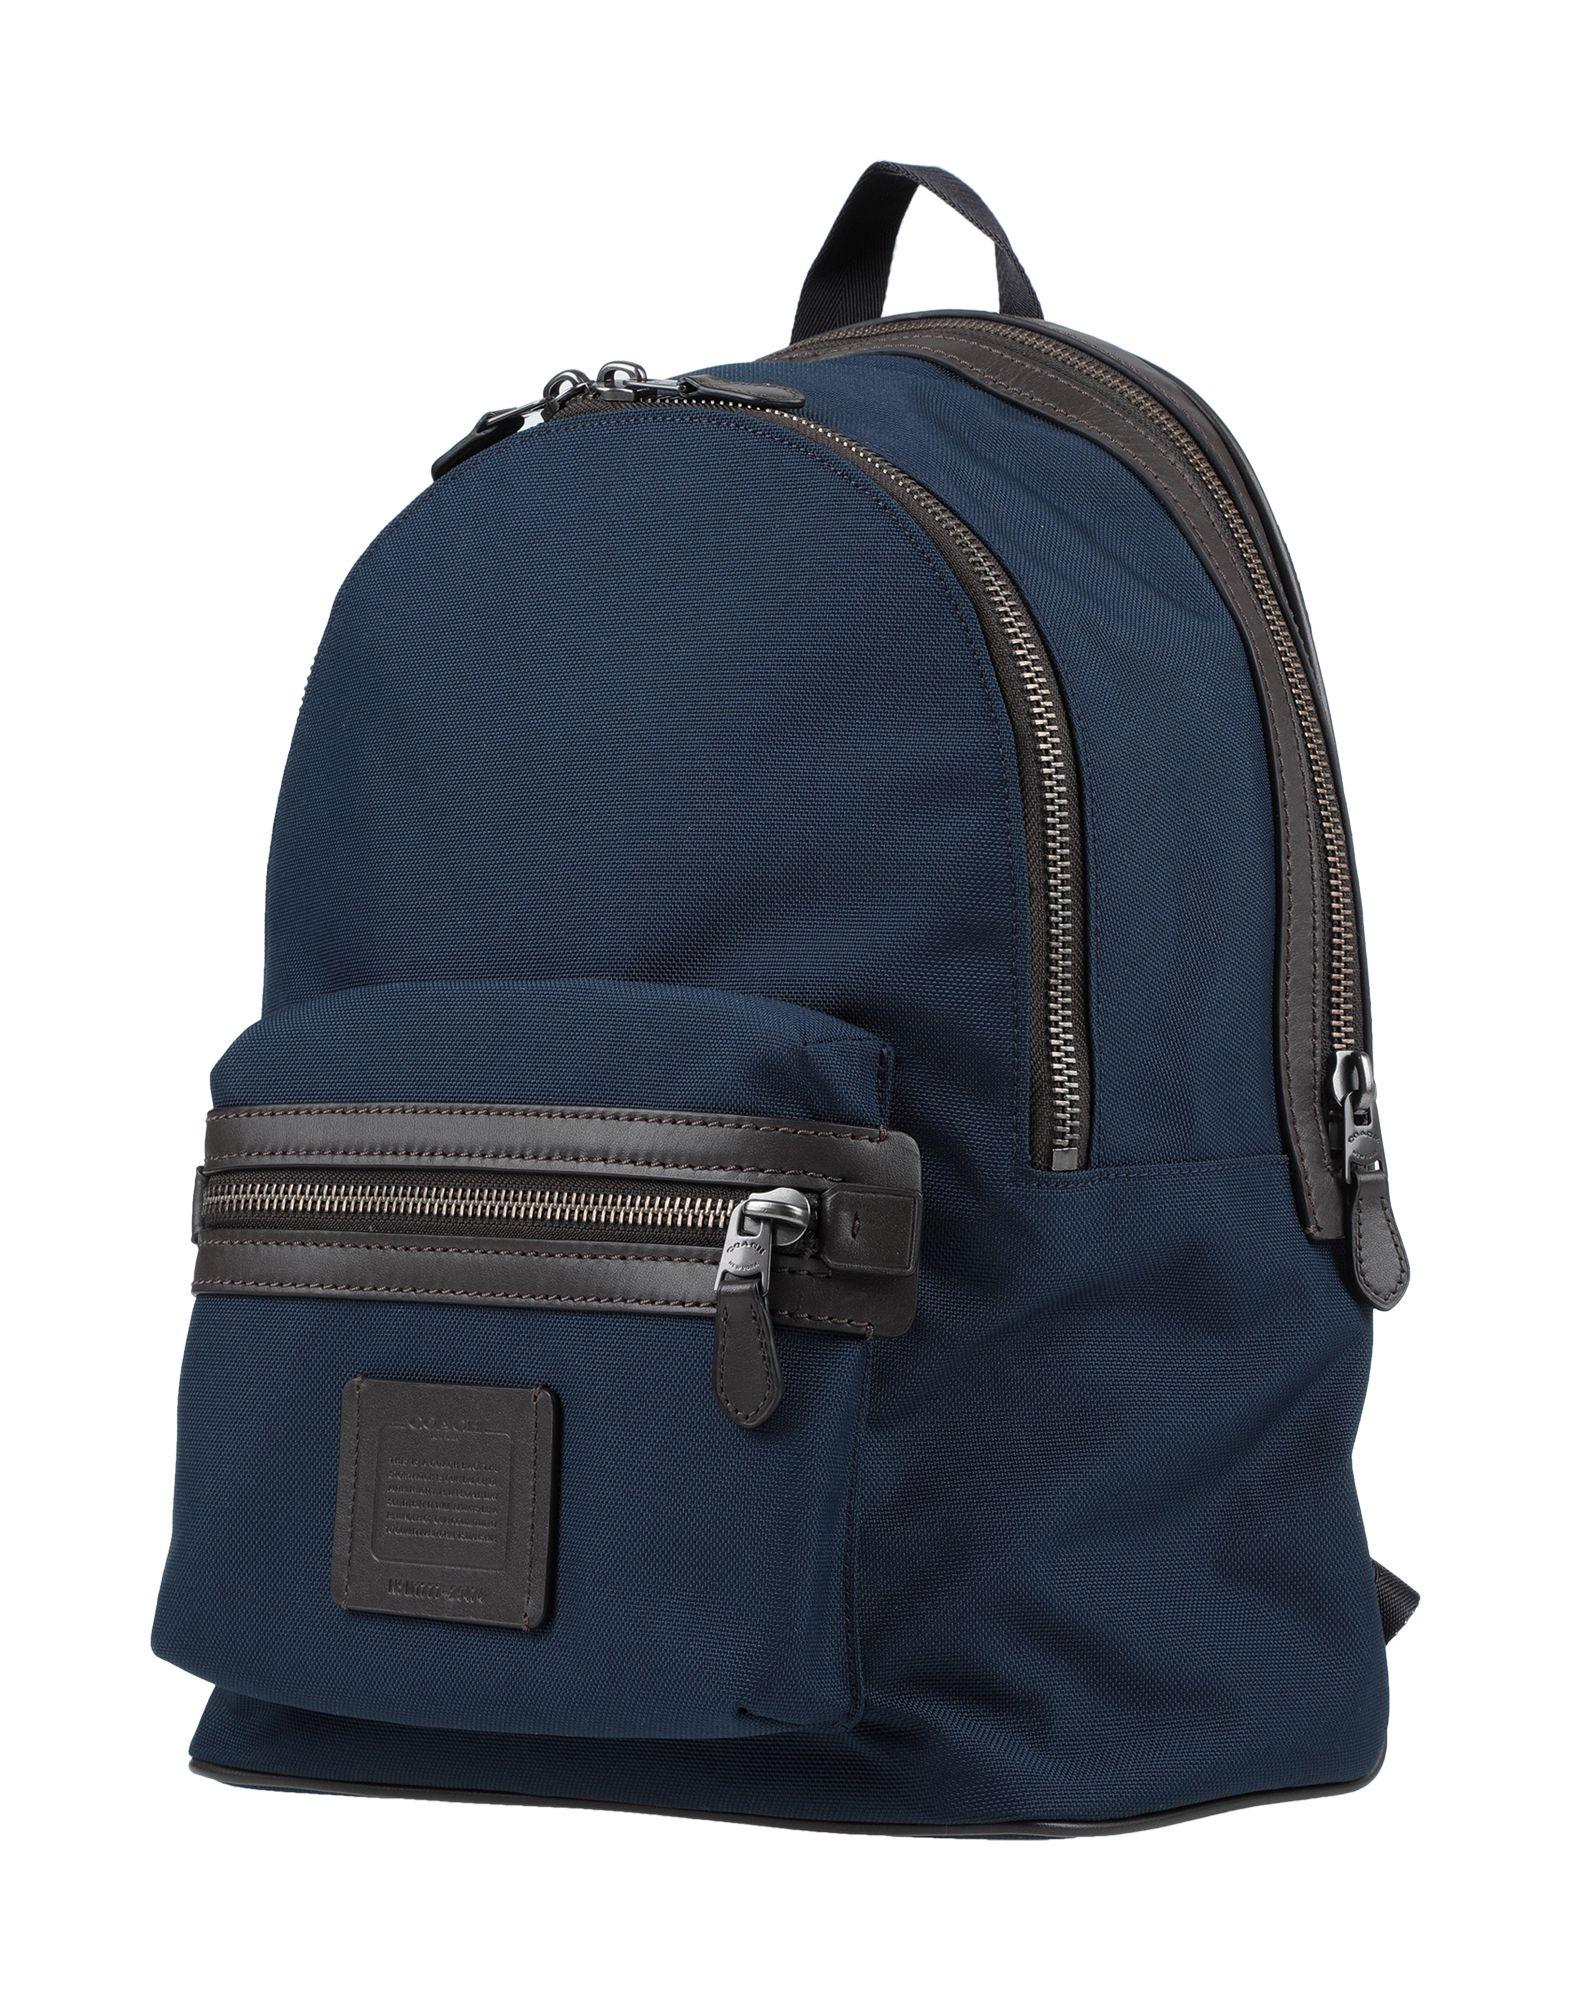 COACH Leather Backpacks & Fanny Packs in Dark Blue (Blue) for Men - Lyst